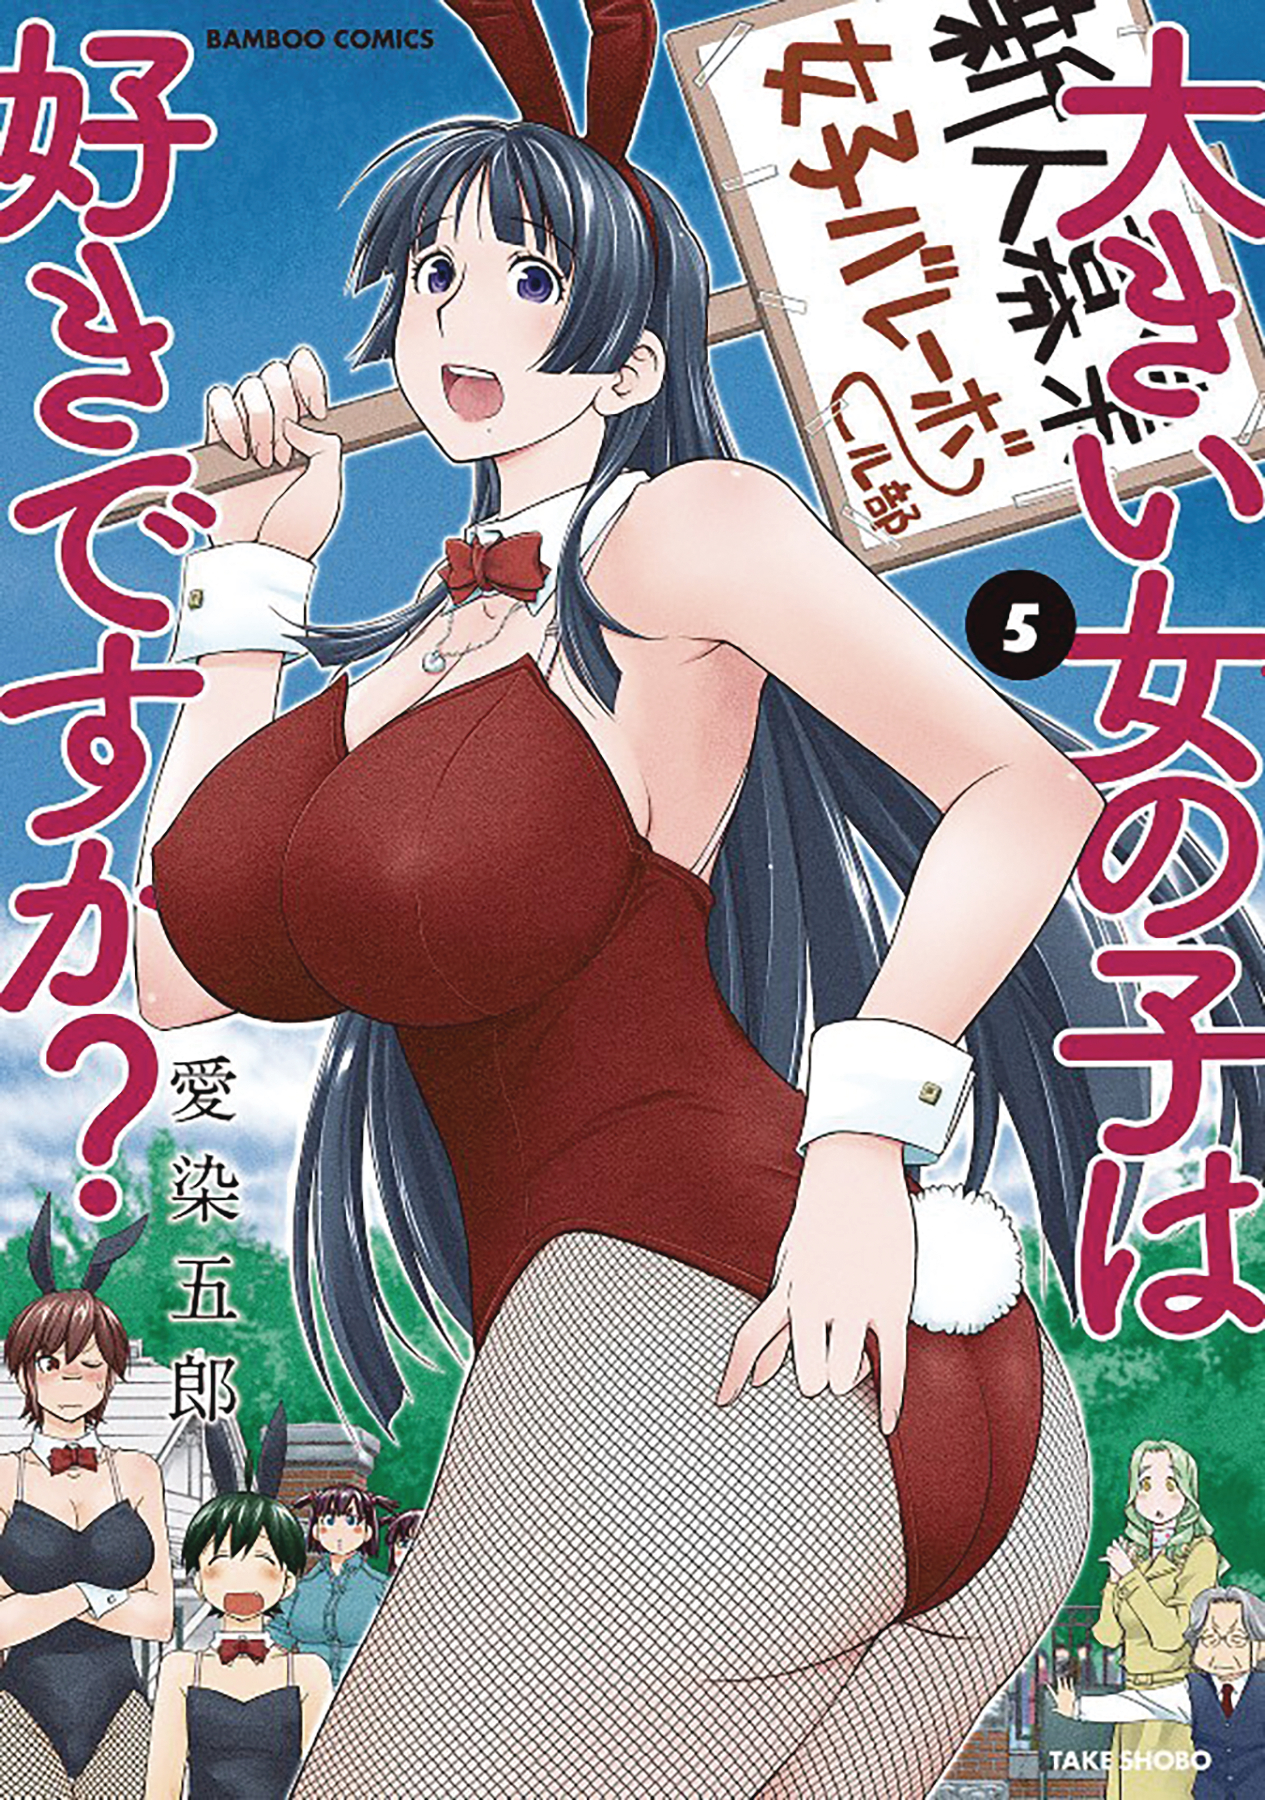 Do You Like Big Girls Manga Volume 5 (Mature)